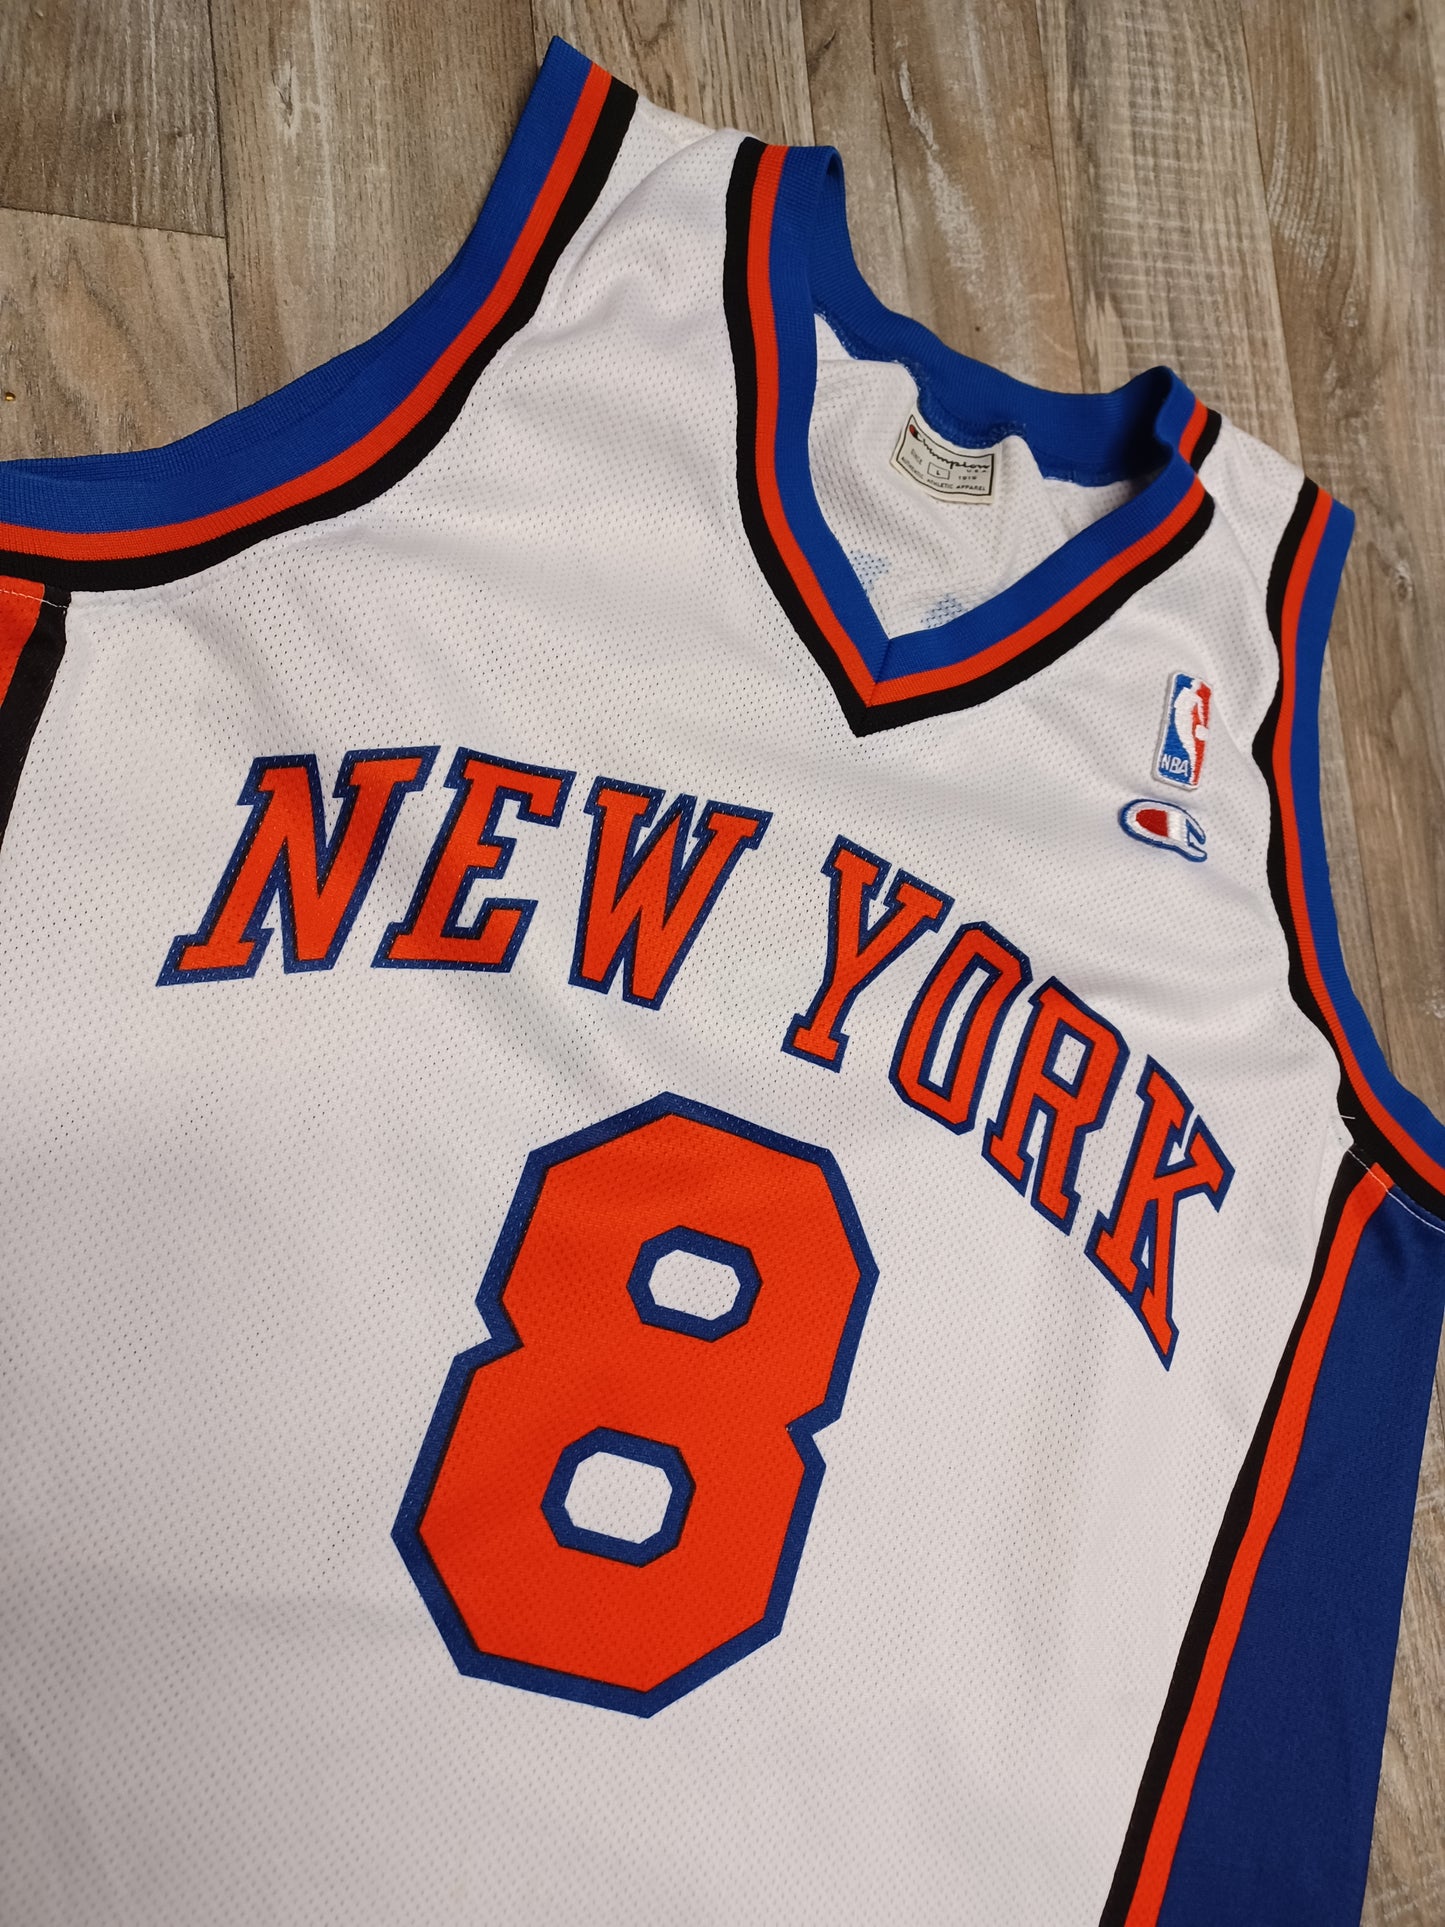 Latrell Sprewell New York Knicks Jersey Size Large